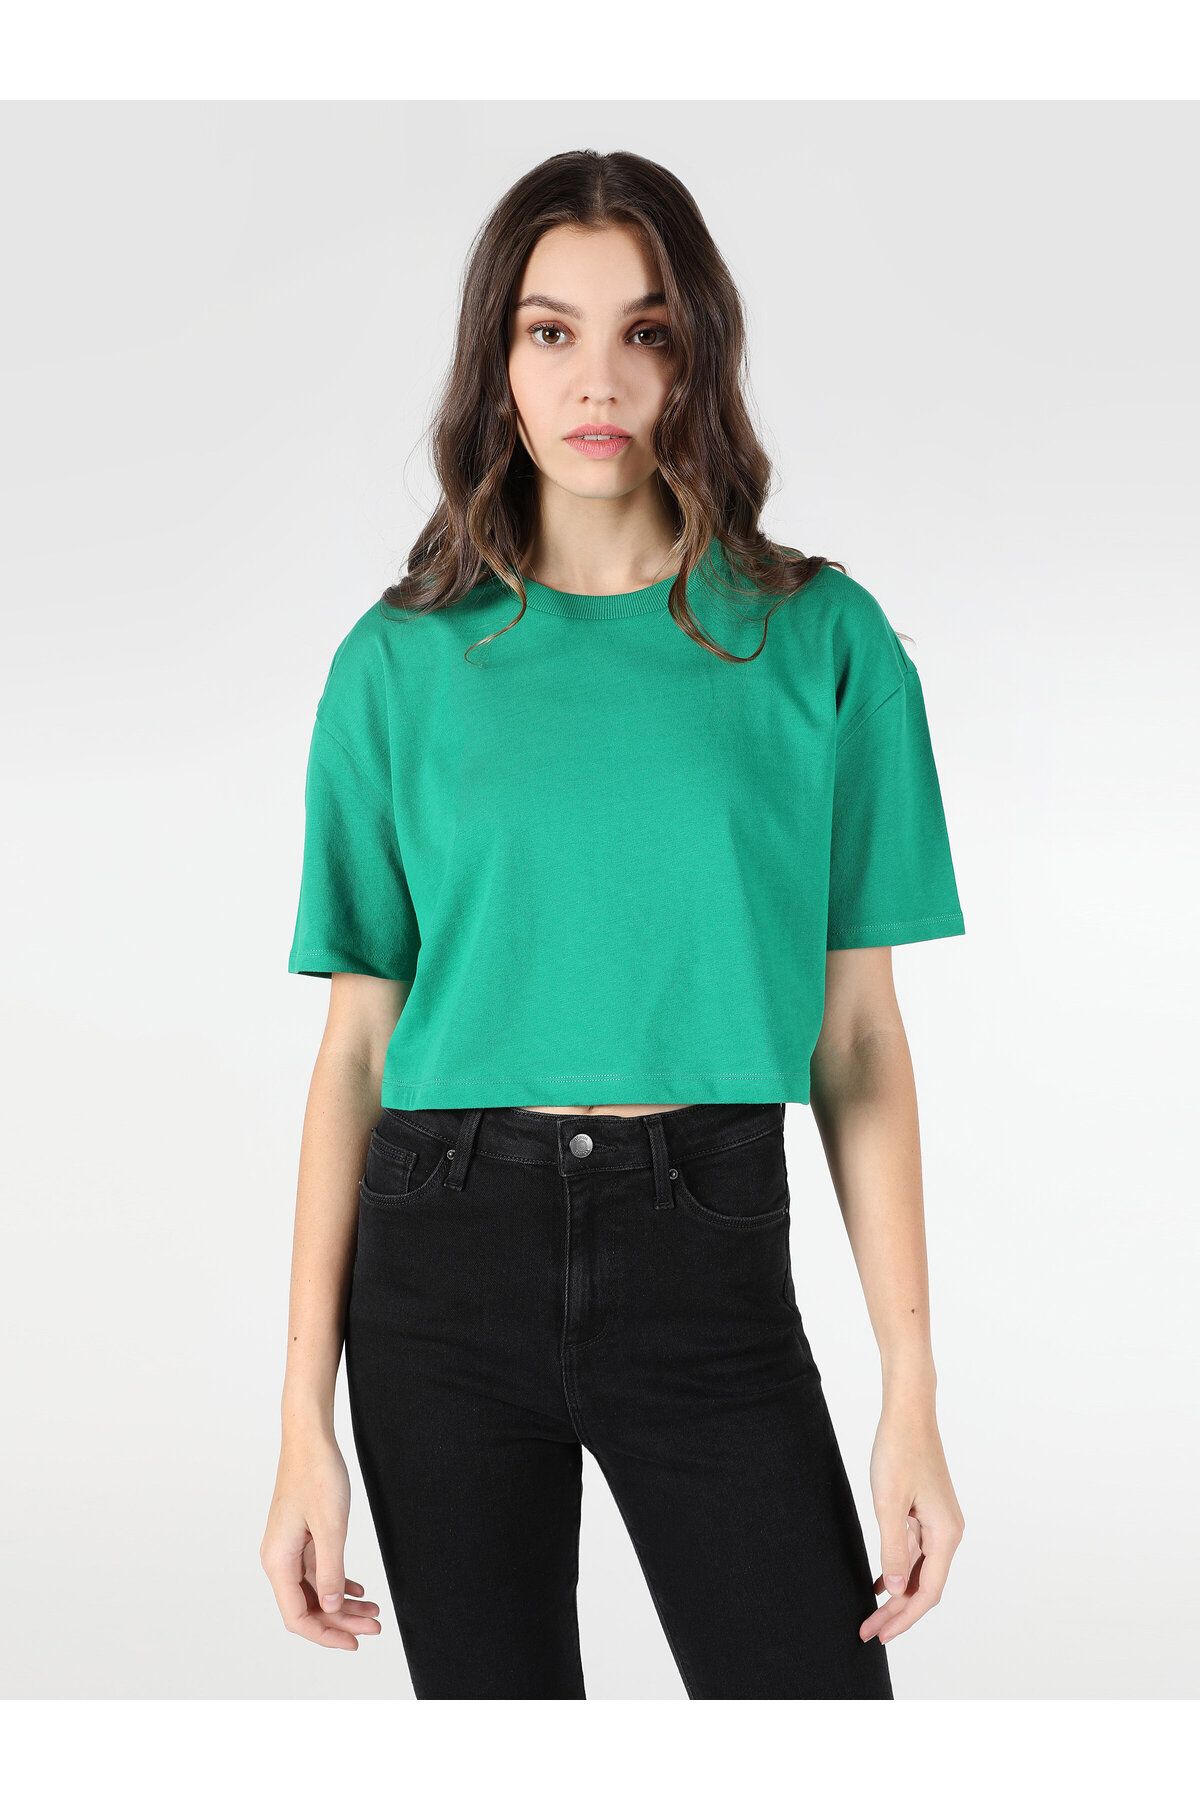 Colin’s تی شرت آستین کوتاه زنانه سبز با تناسب معمولی